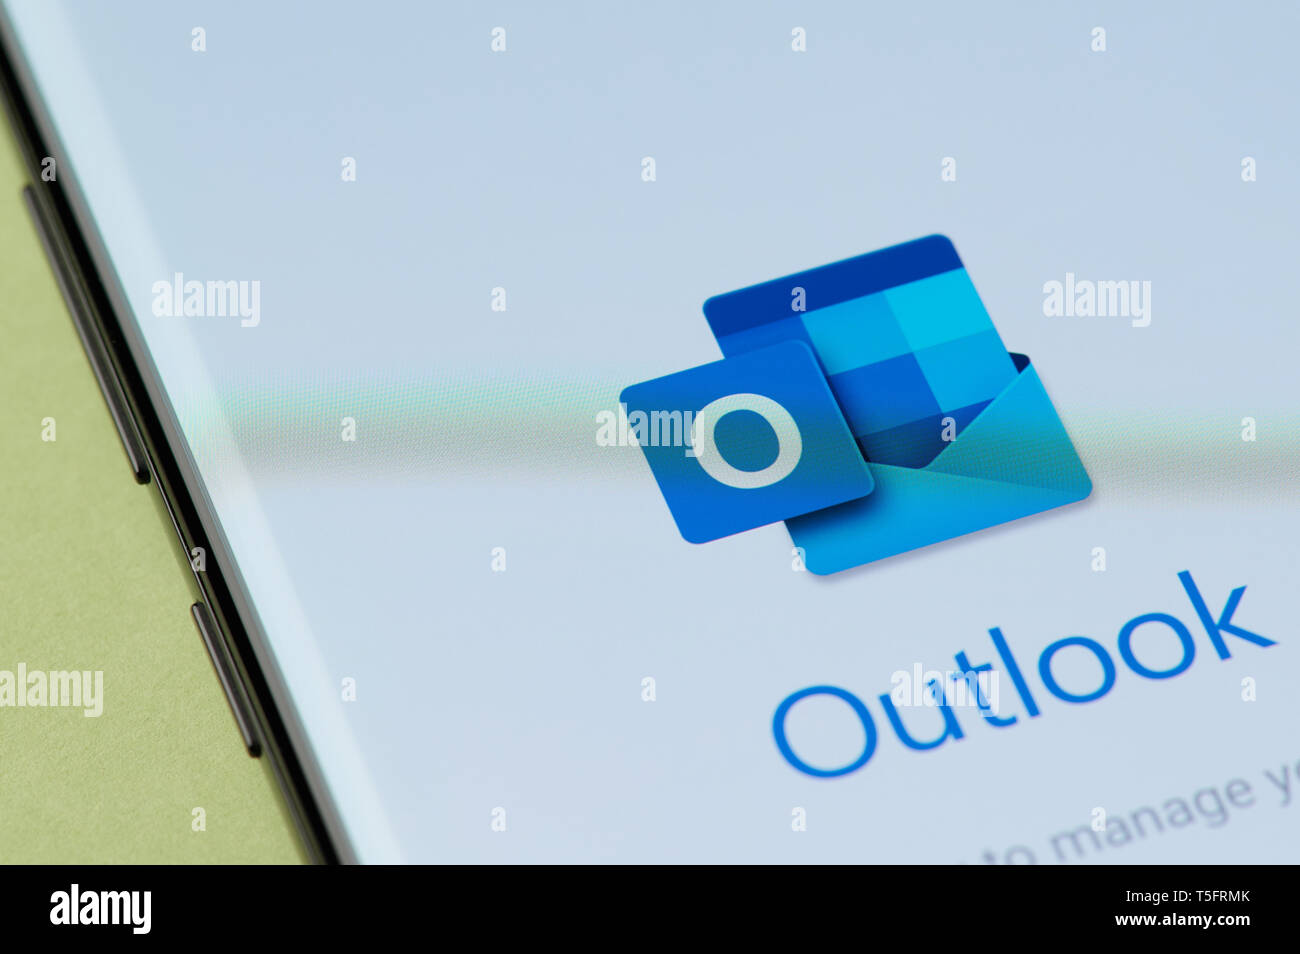 New York, USA - 22. April 2019: Outlook-E-Mail App interface Bildschirm des Smartphones Stockfoto